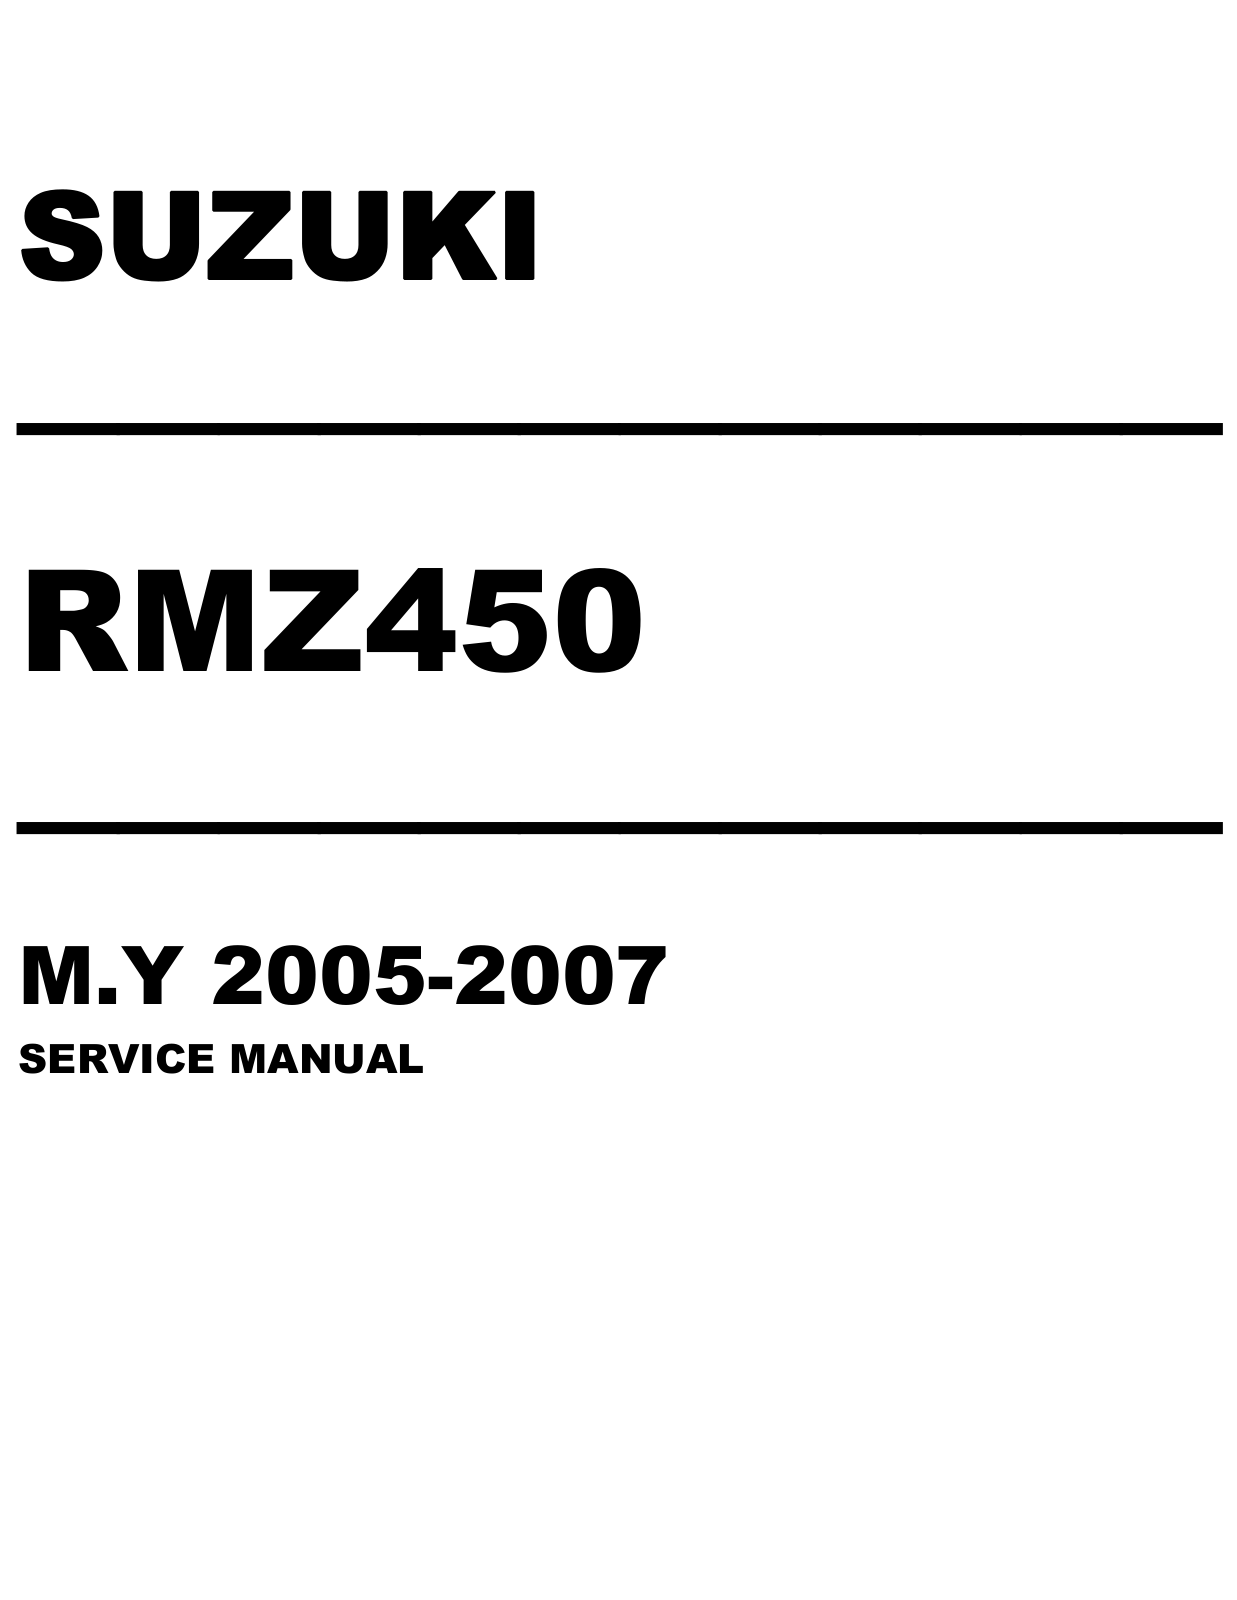 Suzuki RMZ450 Service Manual